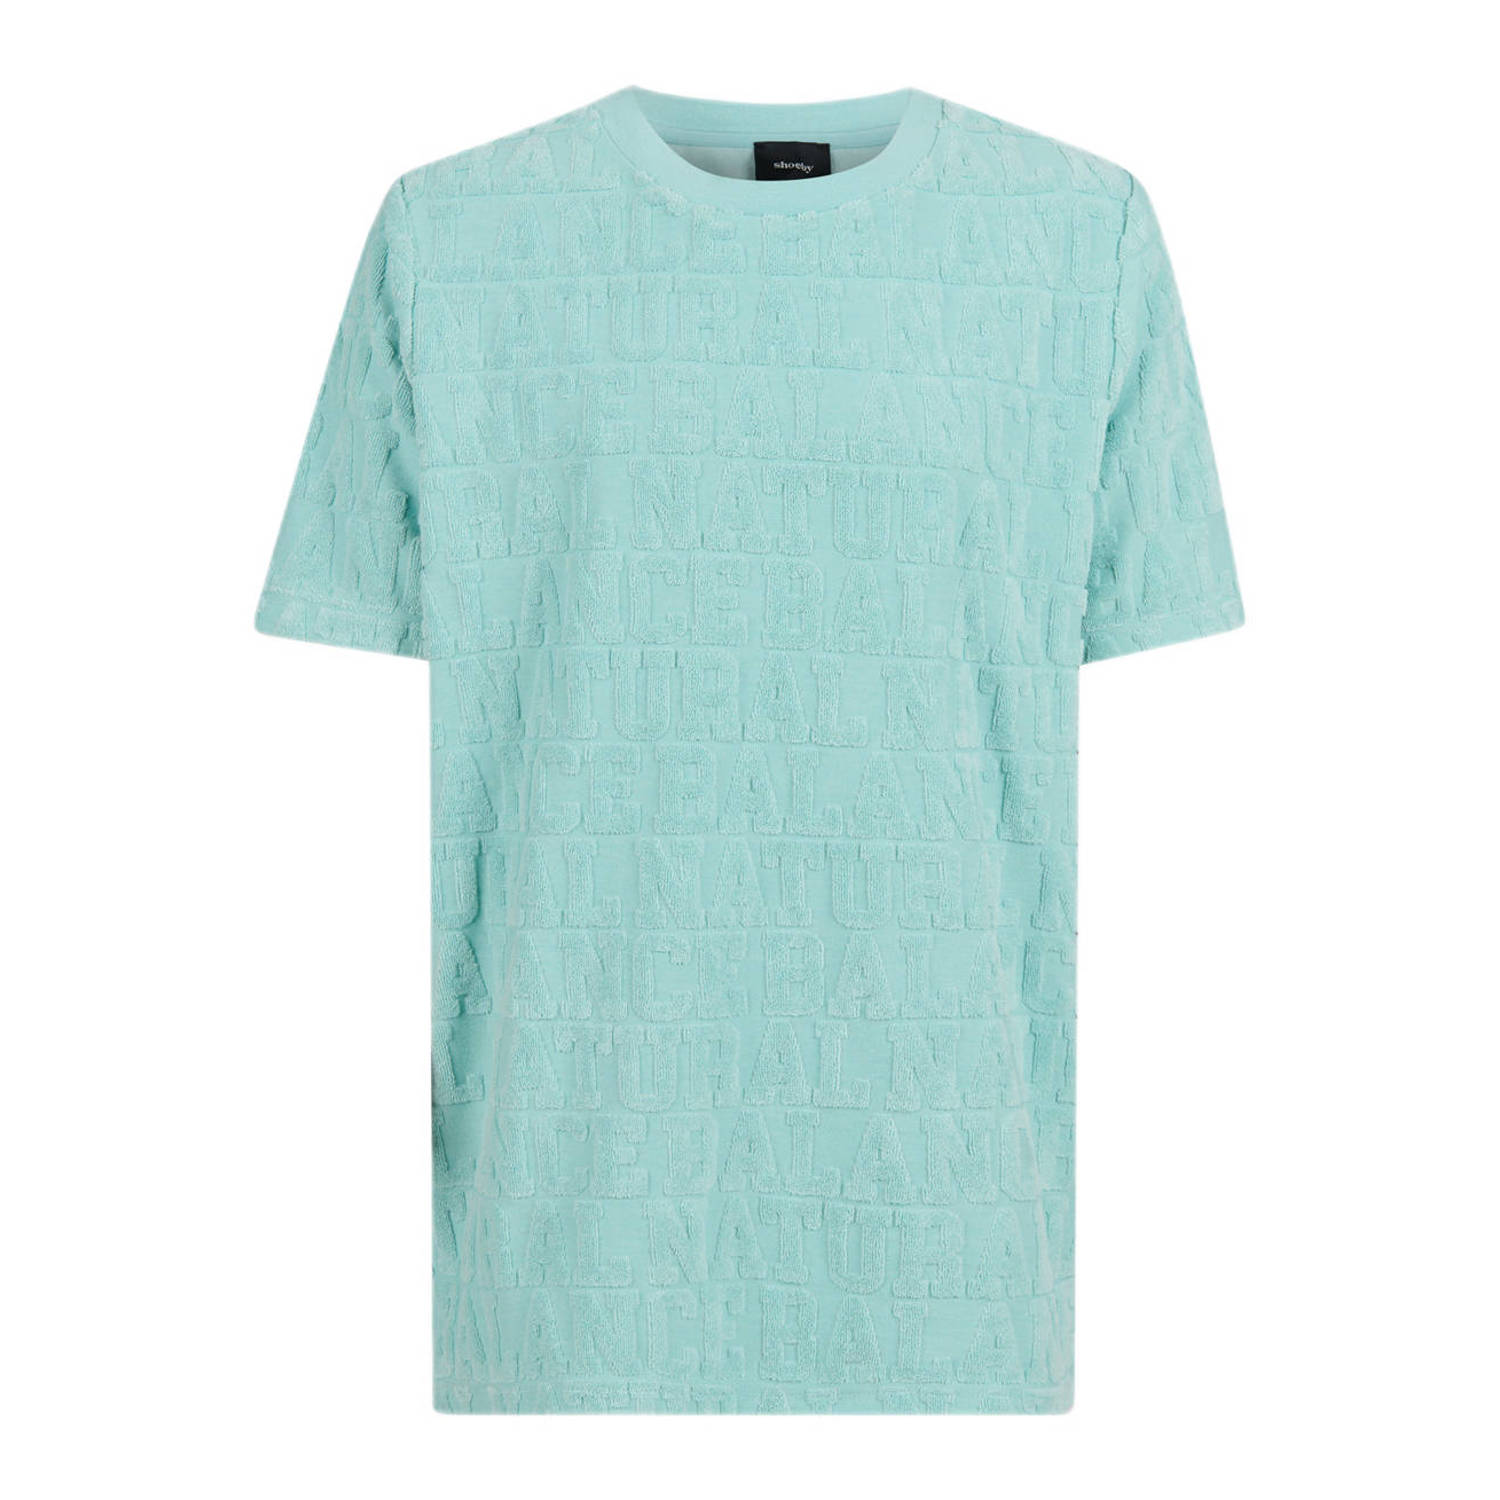 Shoeby T-shirt met tekst lichtblauw